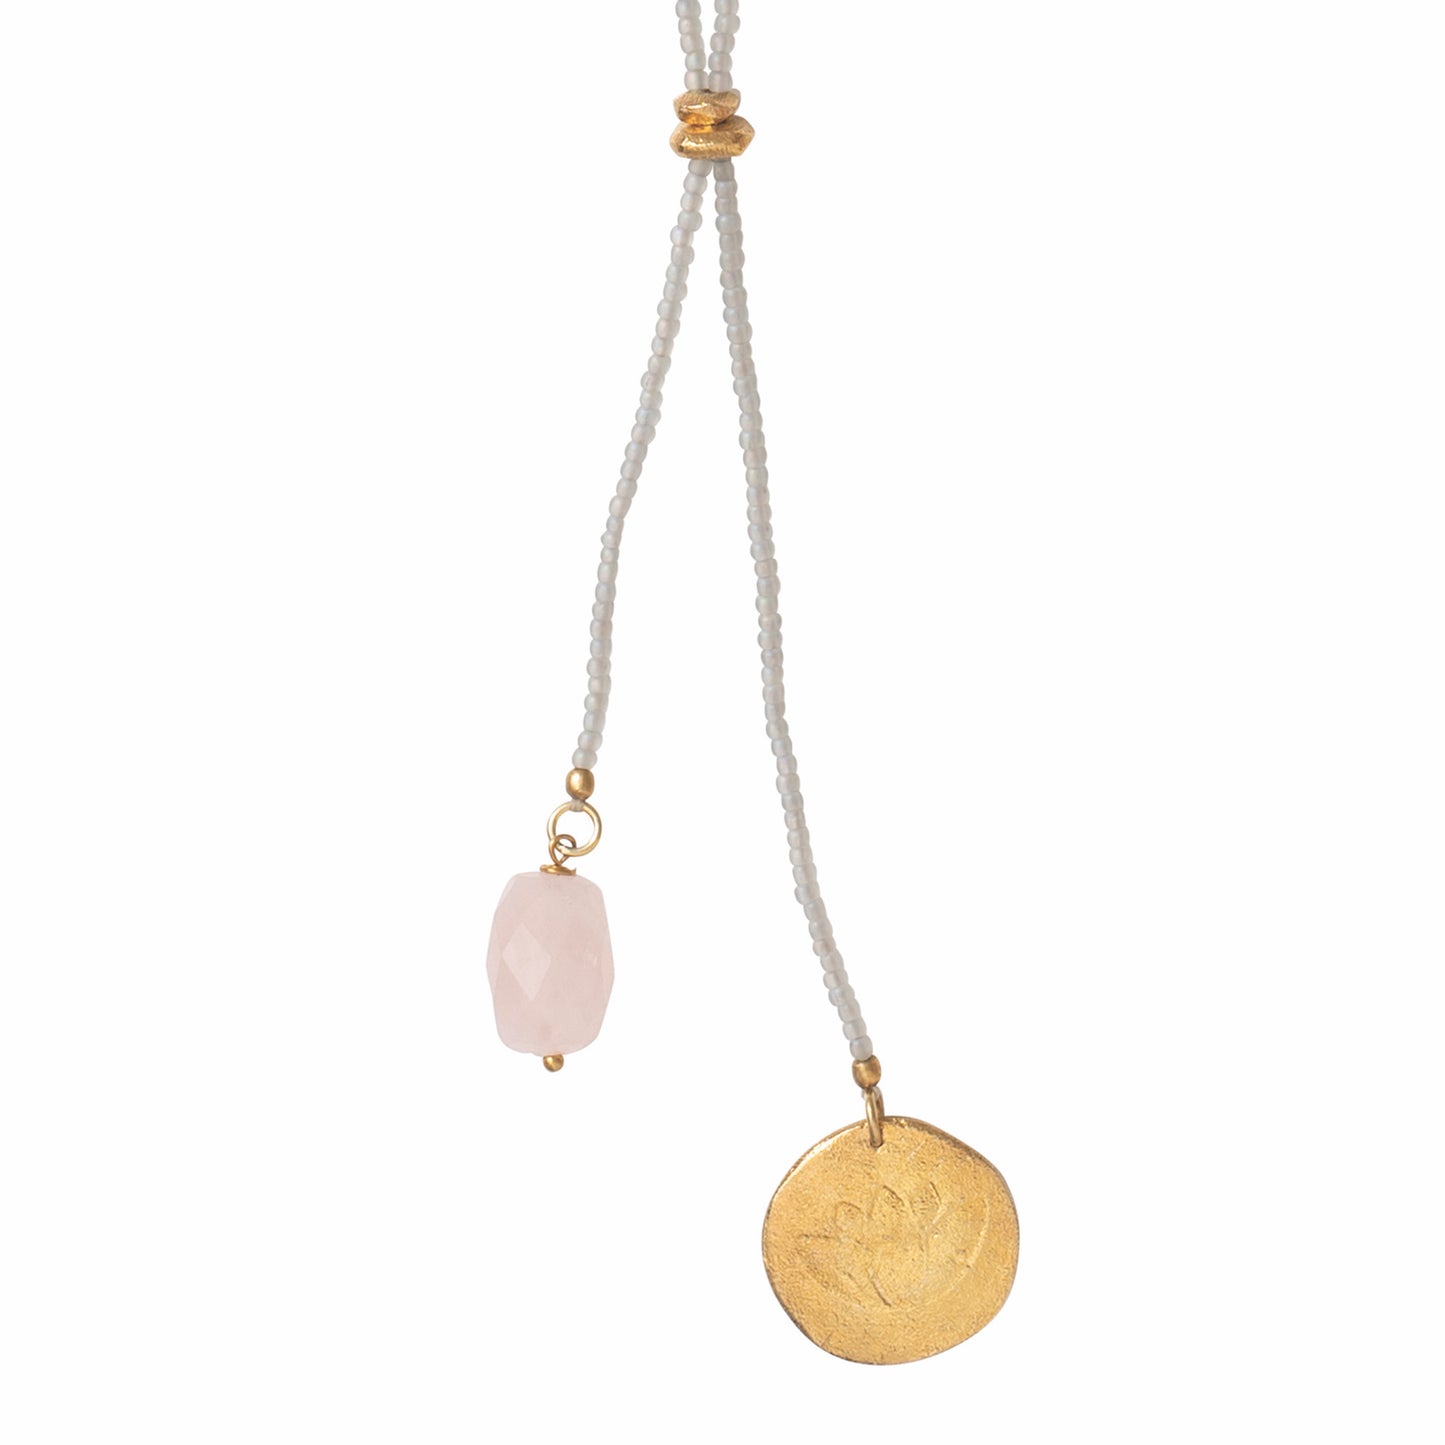 Fairy Long Necklace - Rose Quartz - Gold plated